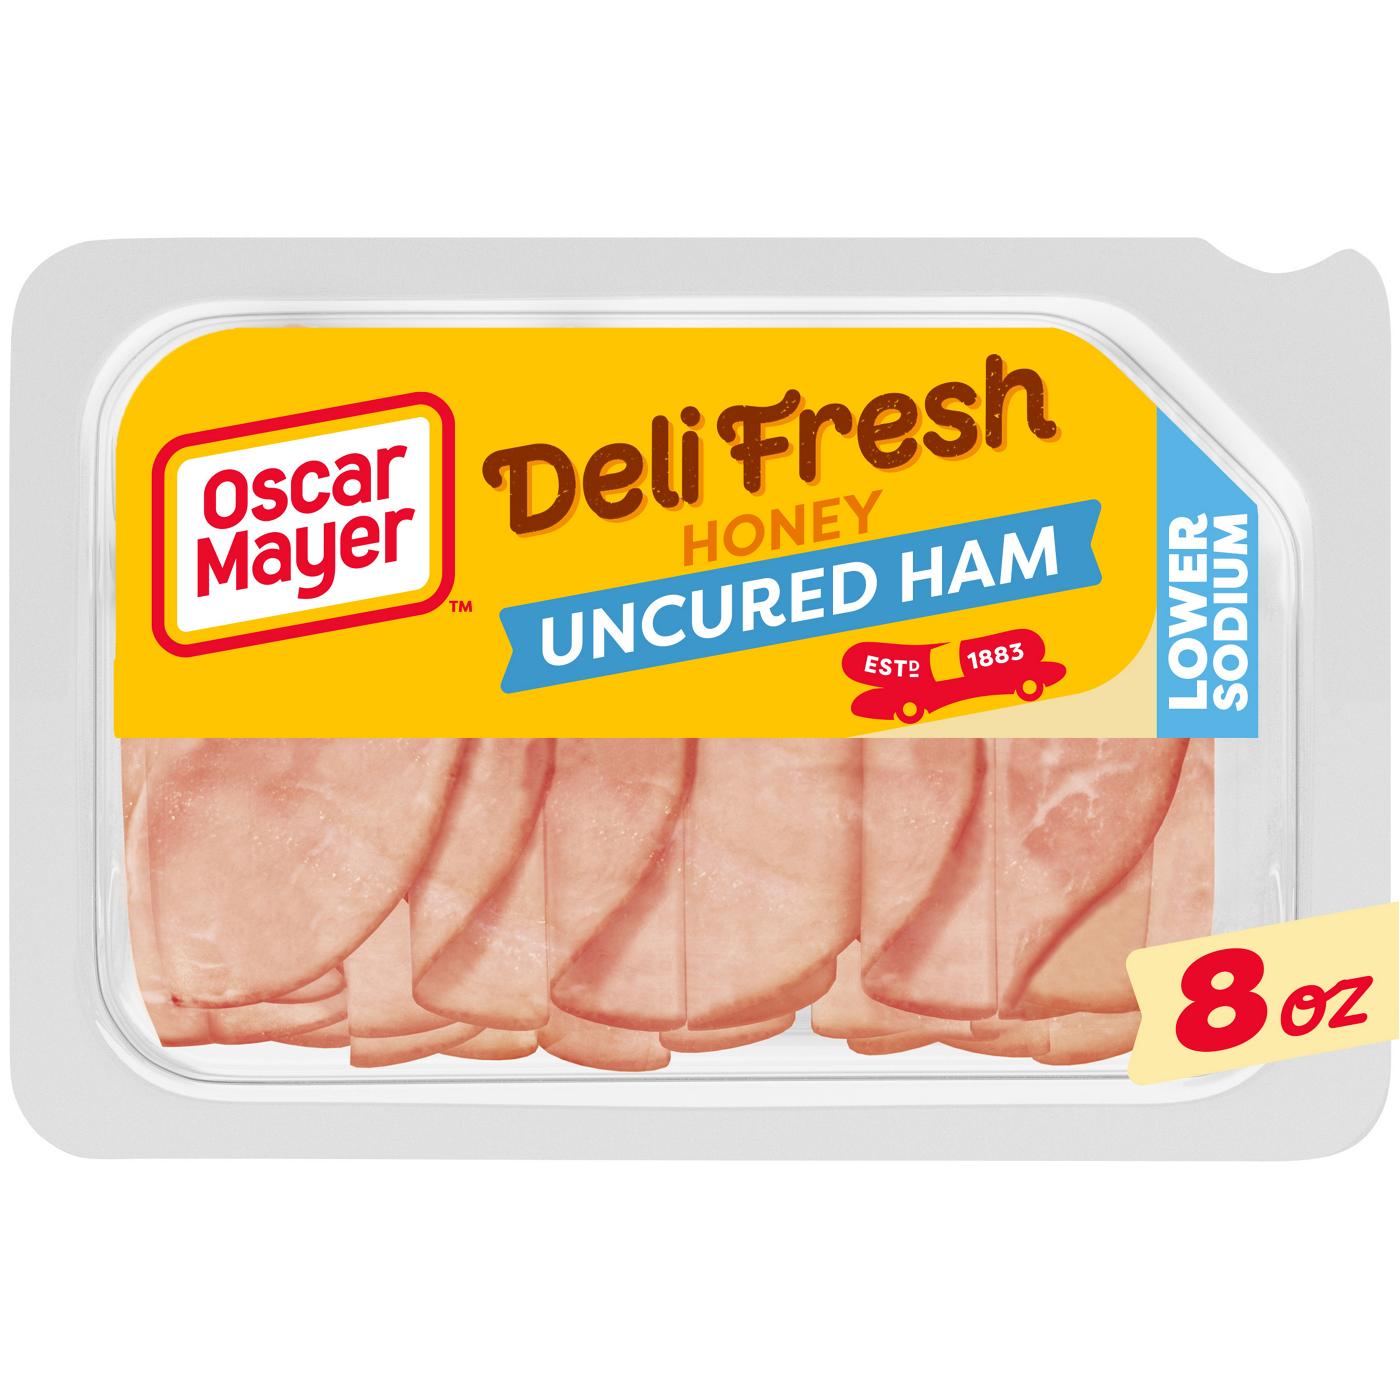 Oscar Mayer Deli Fresh Lower Sodium Honey Uncured Ham Sliced Lunch Meat; image 1 of 4